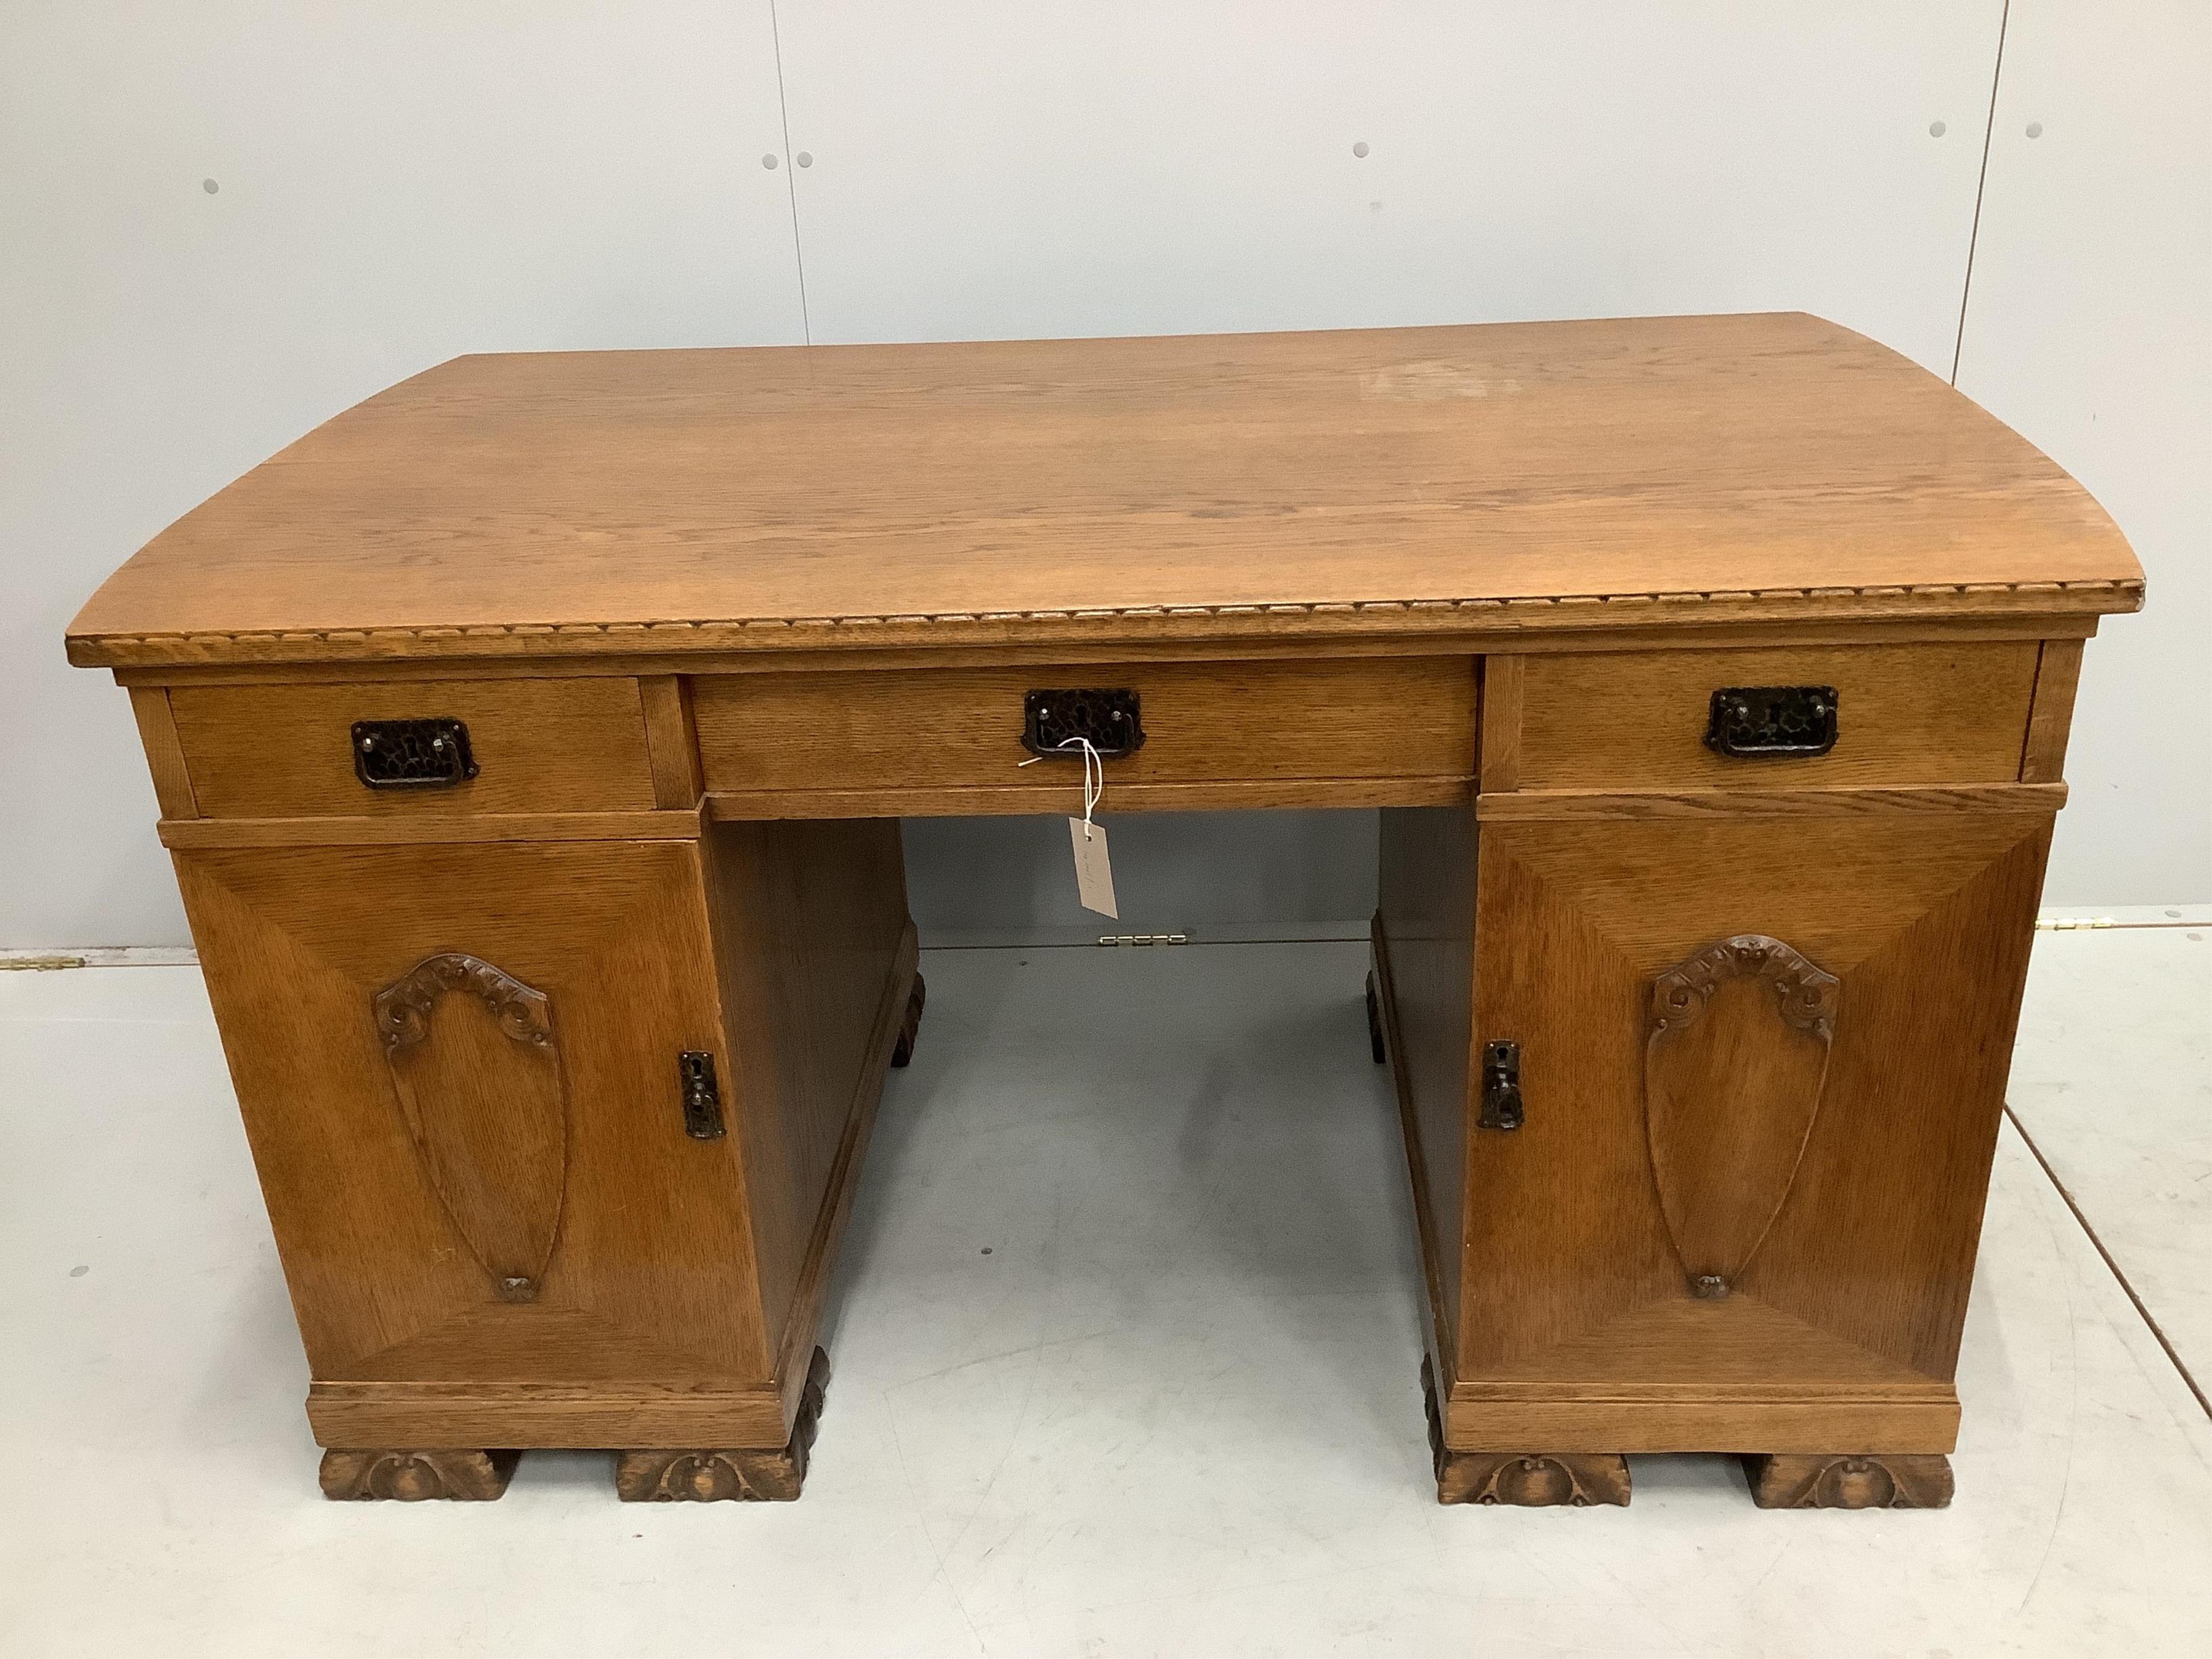 An early 20th century French oak pedestal desk, width 139cm, depth 79cm, height 76cm. Condition - fair